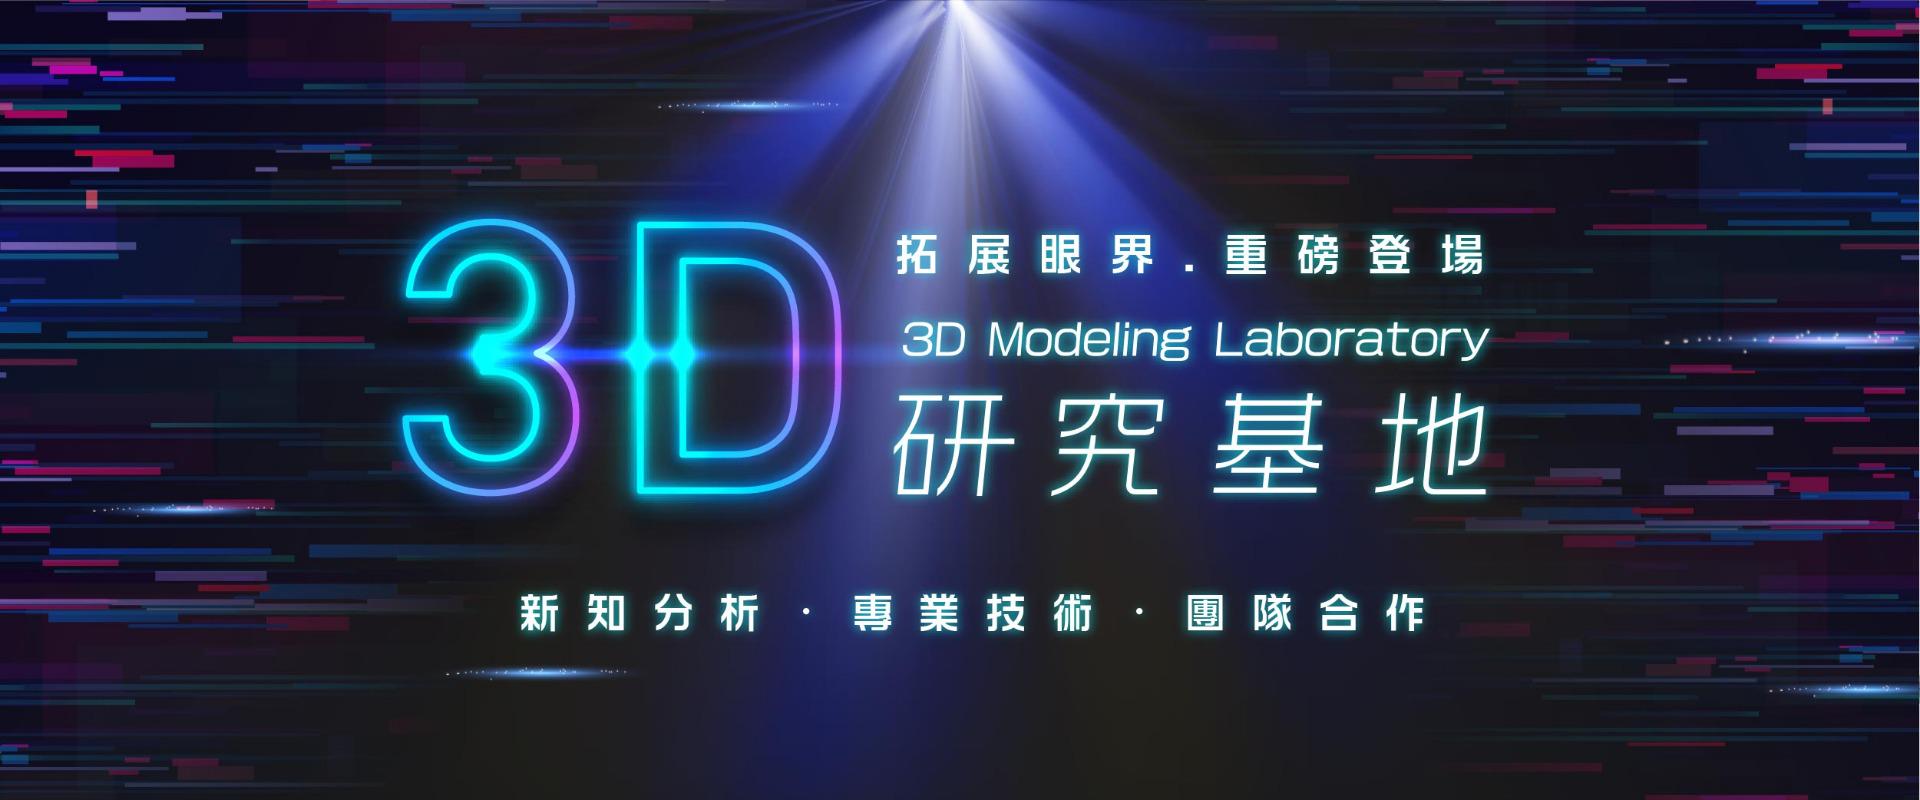 3D research base, Wang Yi design, kingone design, 3D modeling, 3D modeling application